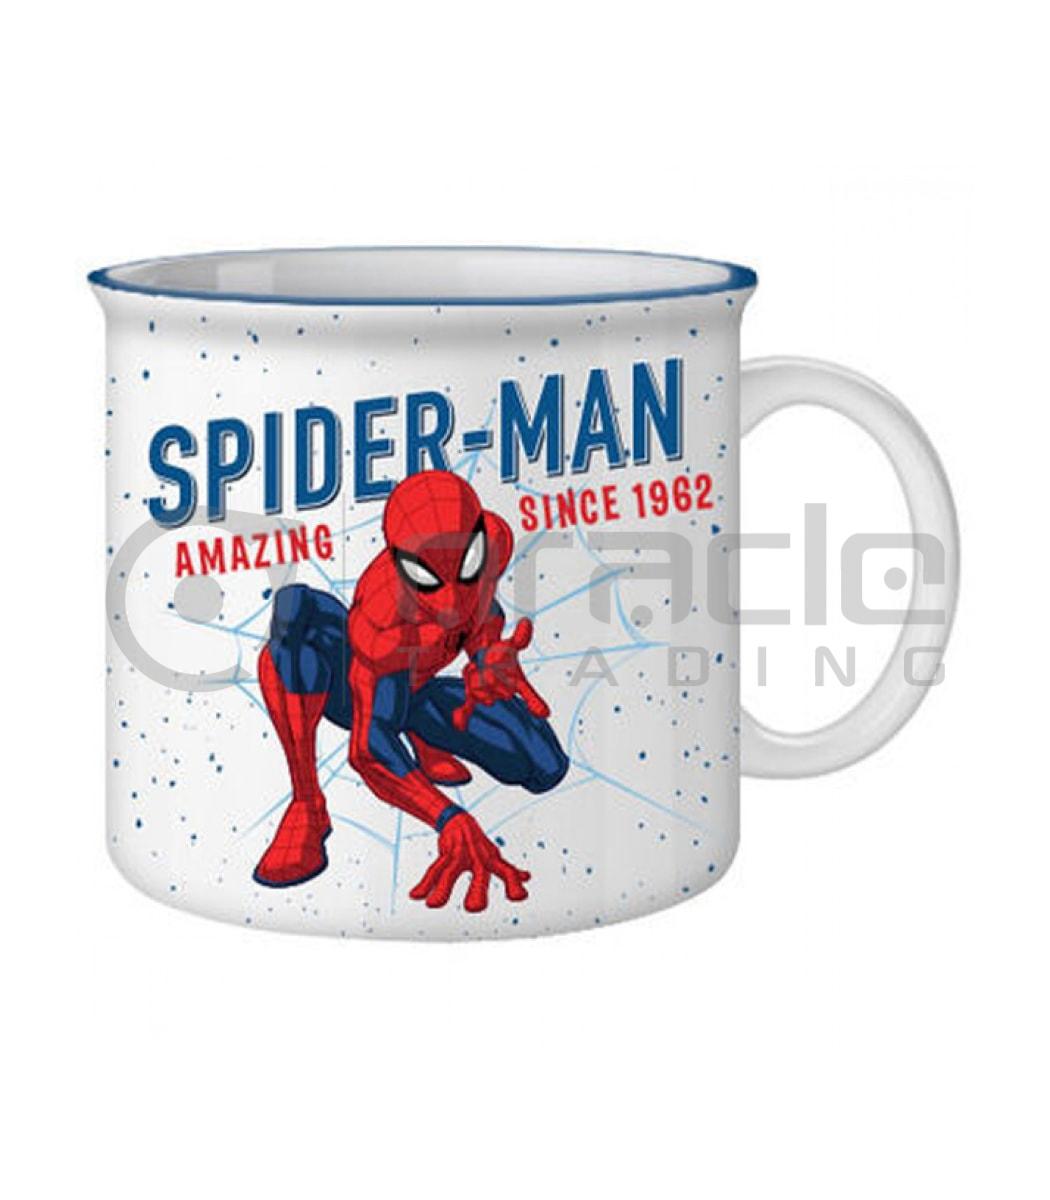 Spiderman Jumbo Camper Mug - 1962 Authentic